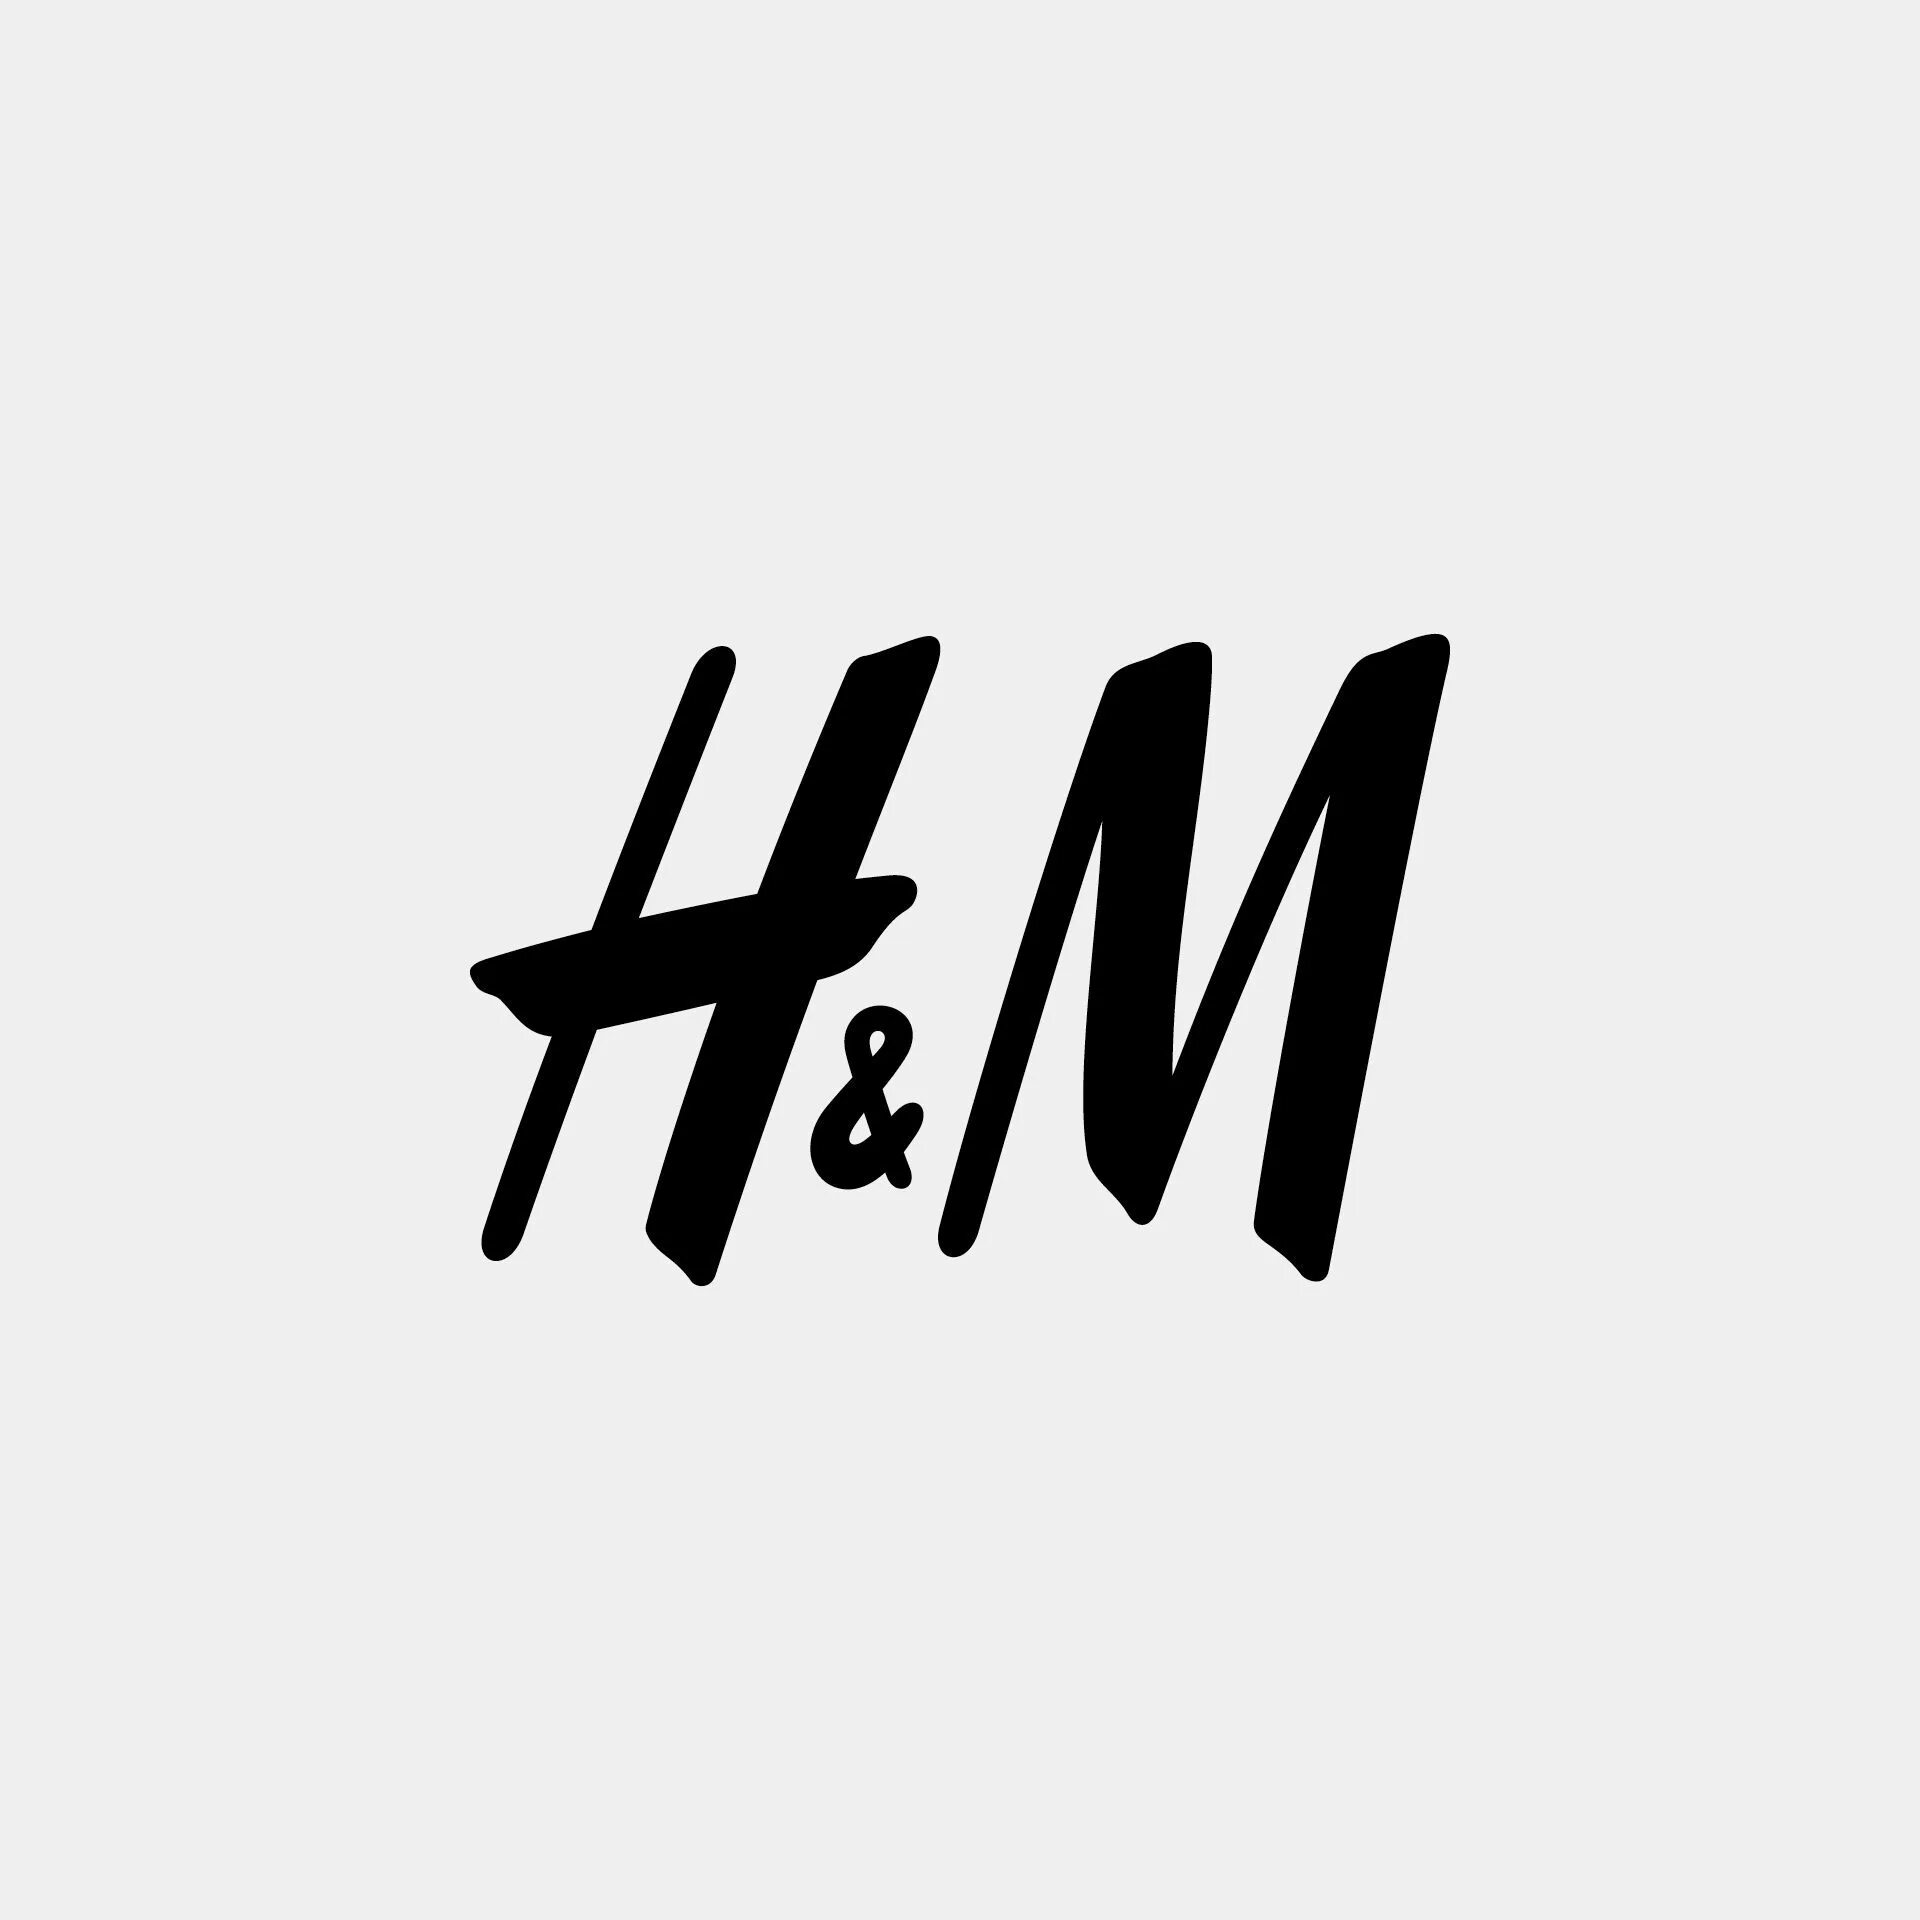 Https m com h. Значок эйч энд эм. H&M надпись. Бренд h m. HM Home логотип.